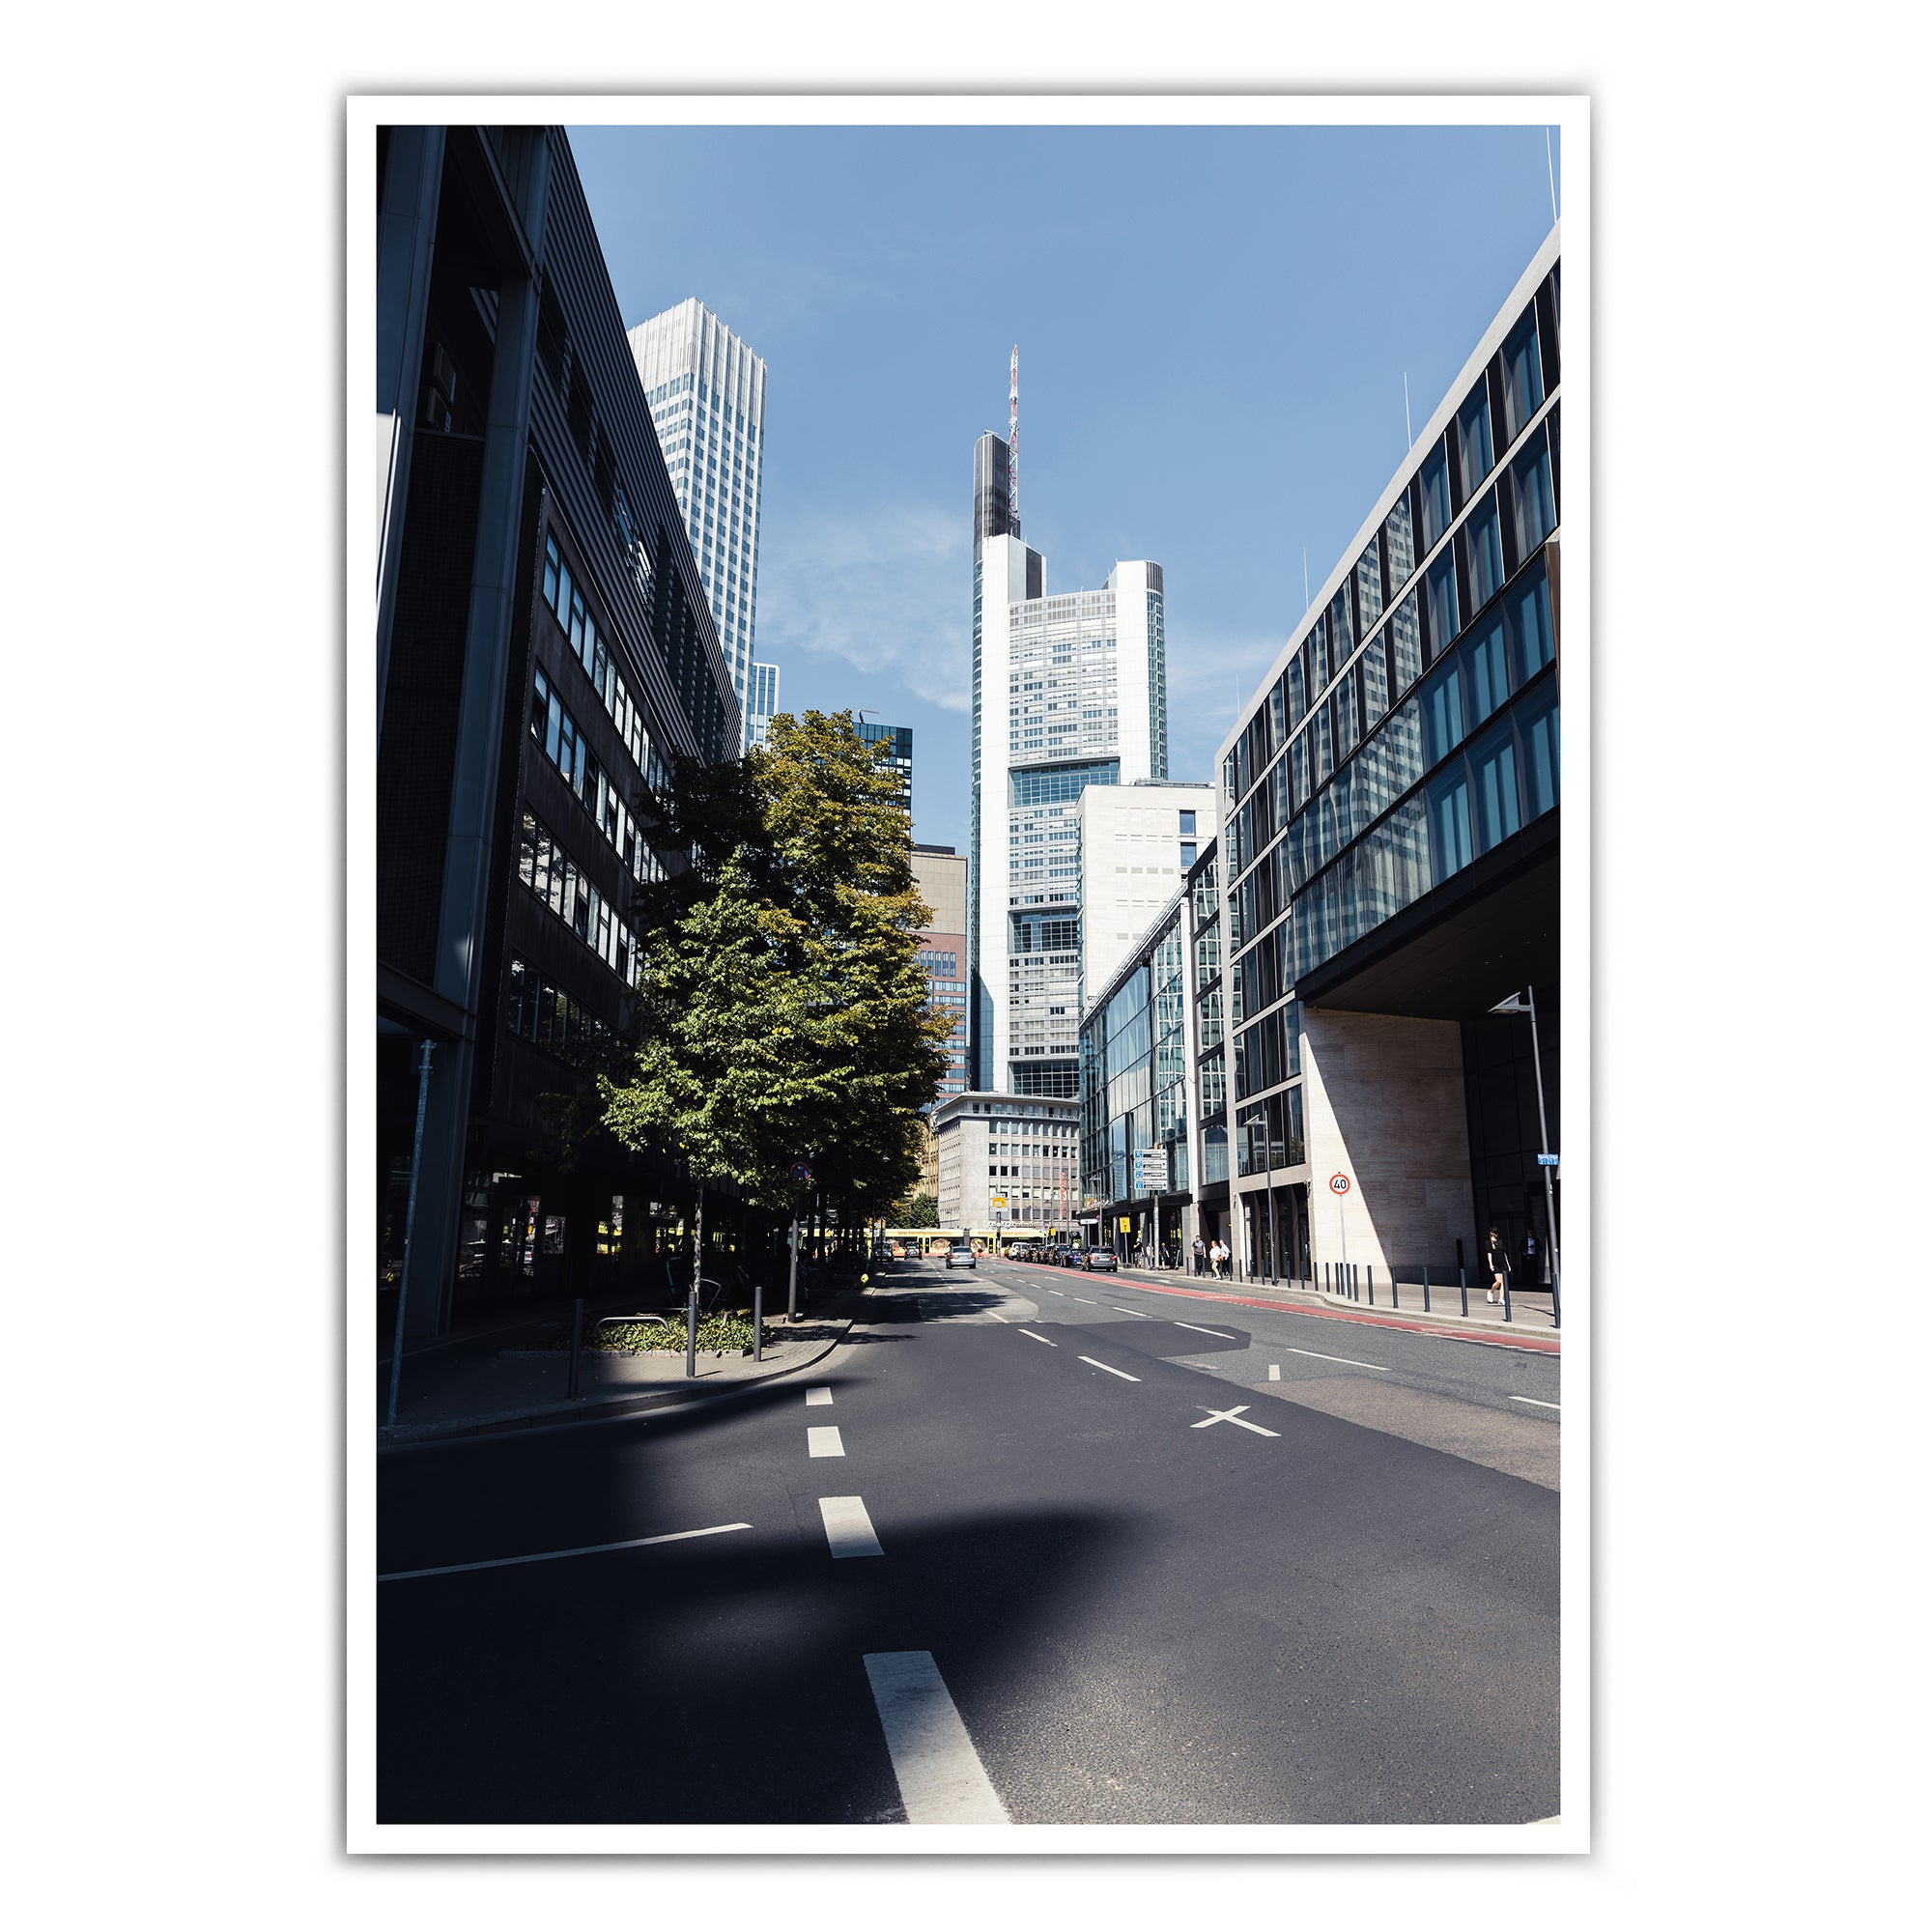 4one-pictures-frankfurt-am-main-poster-skyline-bild-ffm-kunstdruck-shop-5mm_020bfc01-ccc8-494d-a06a-48383d374fa9.jpg